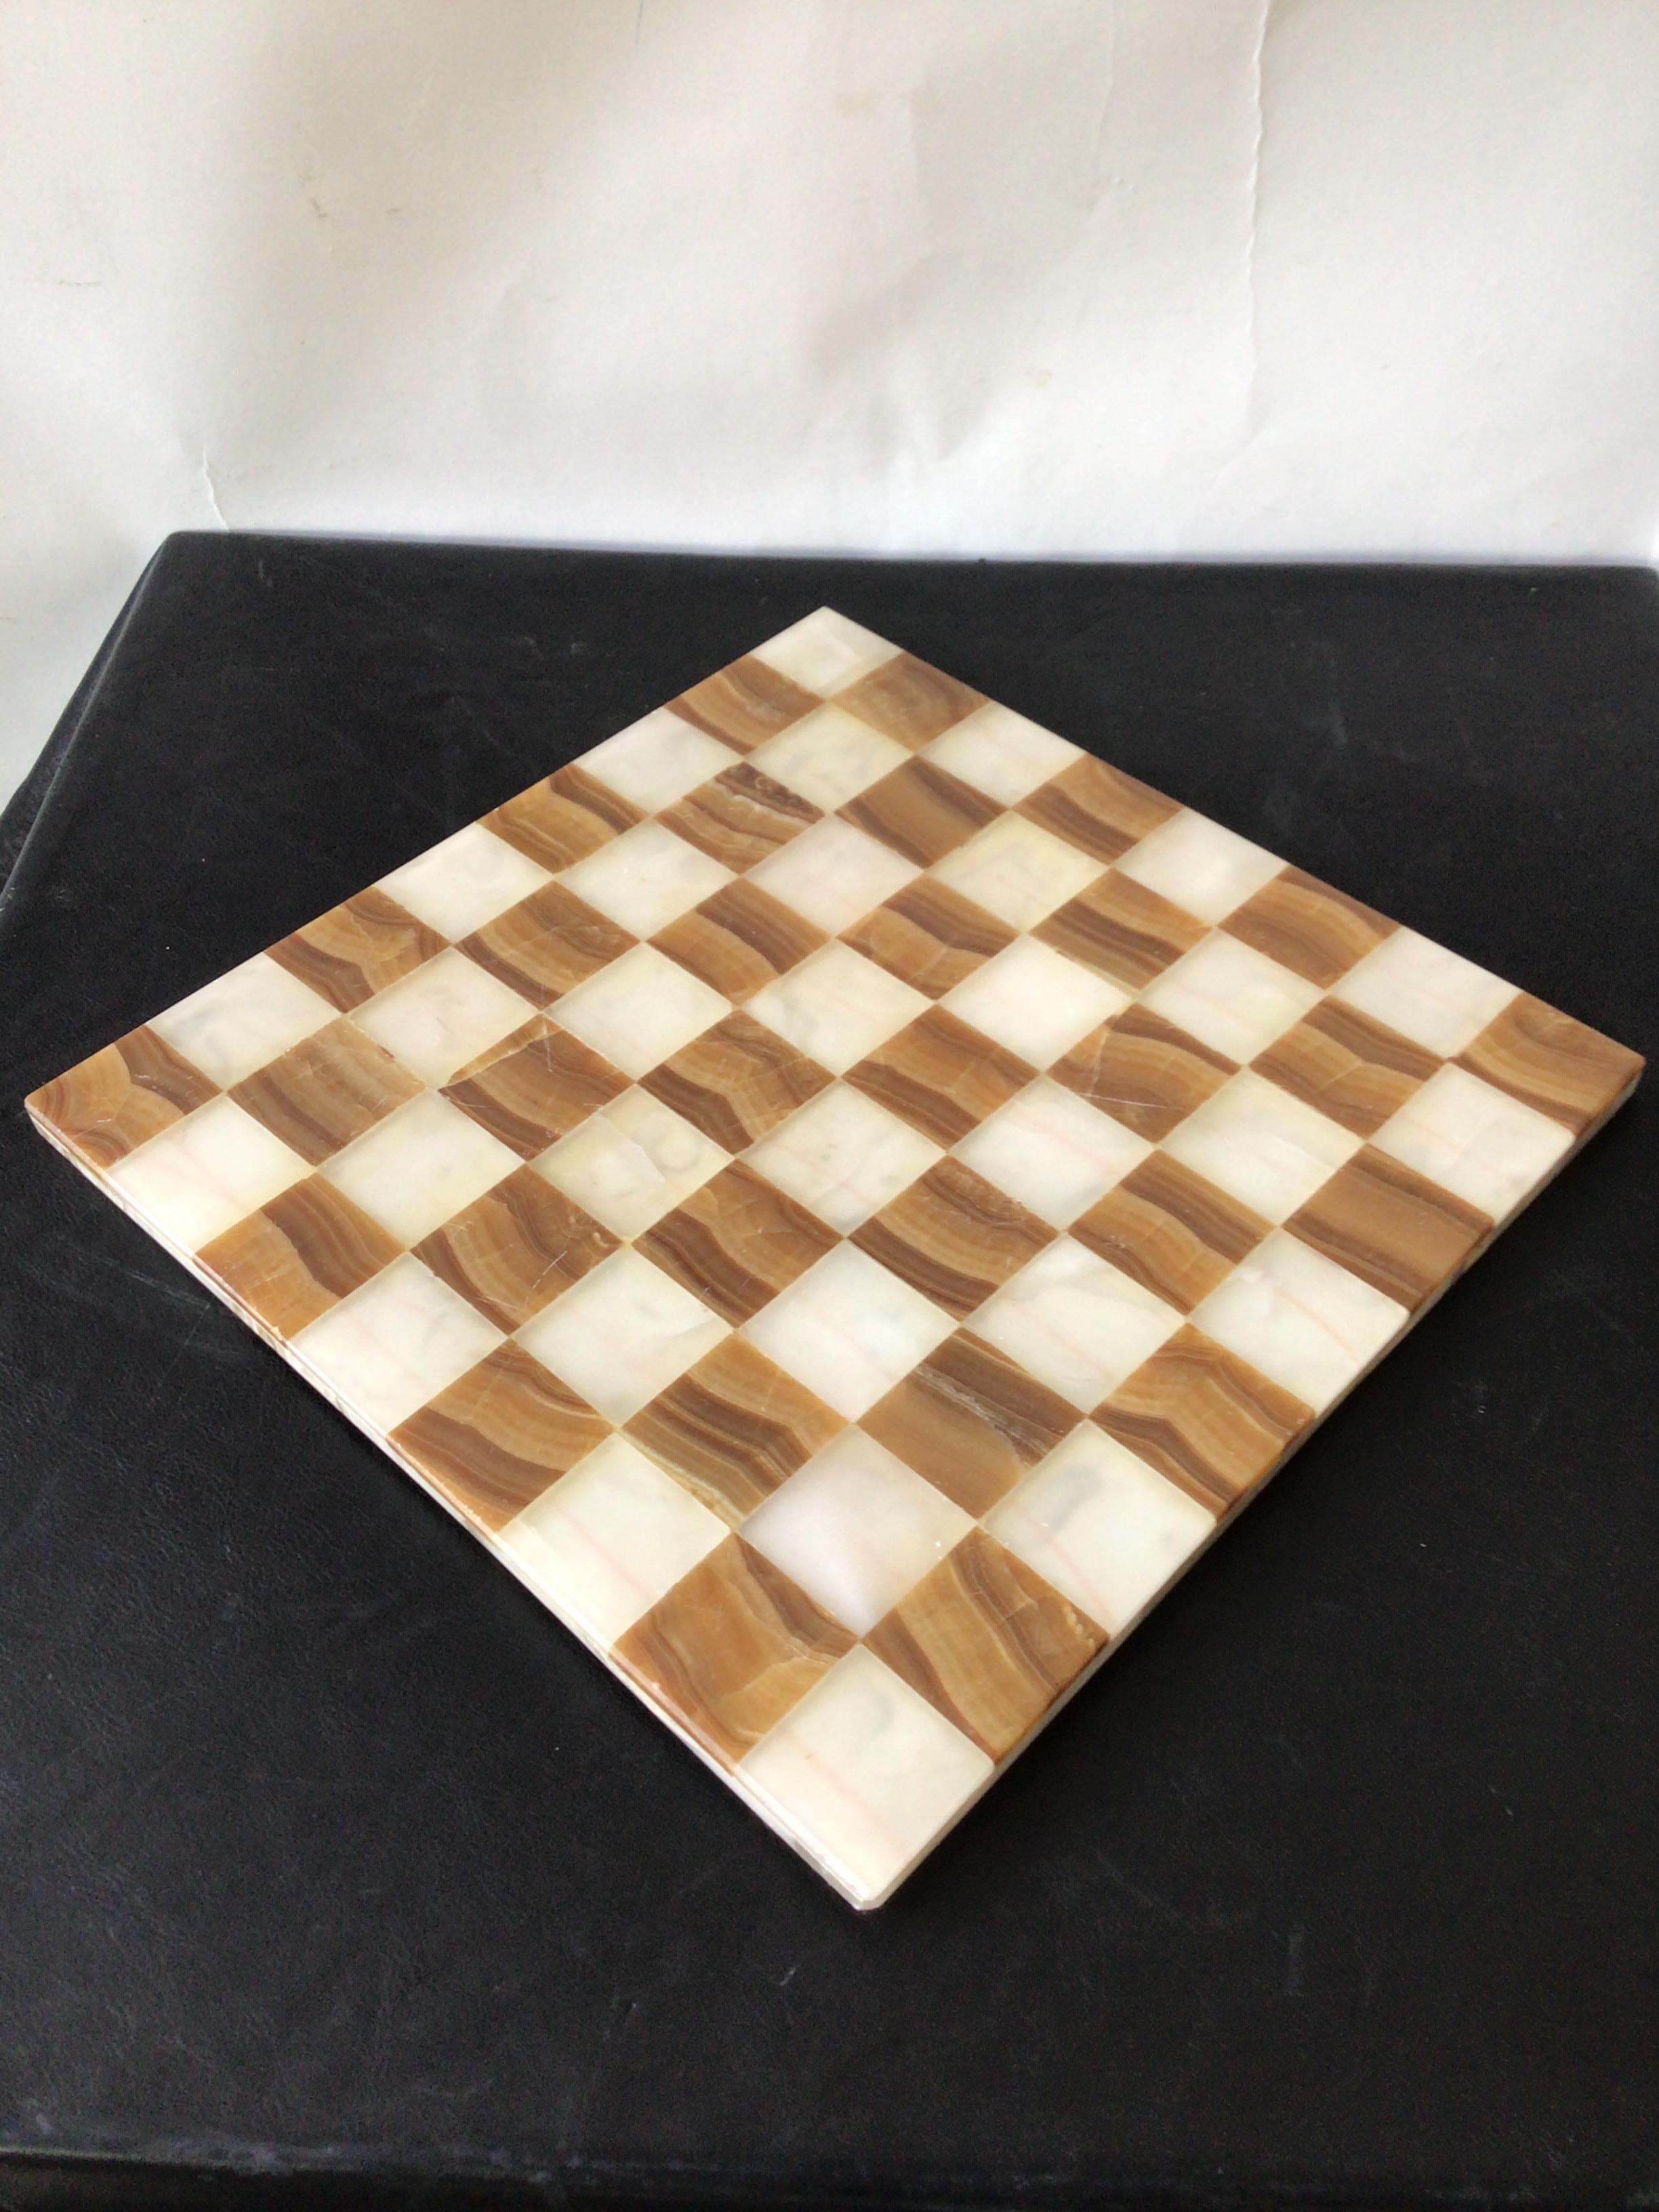 Inlaid onyx chess board.